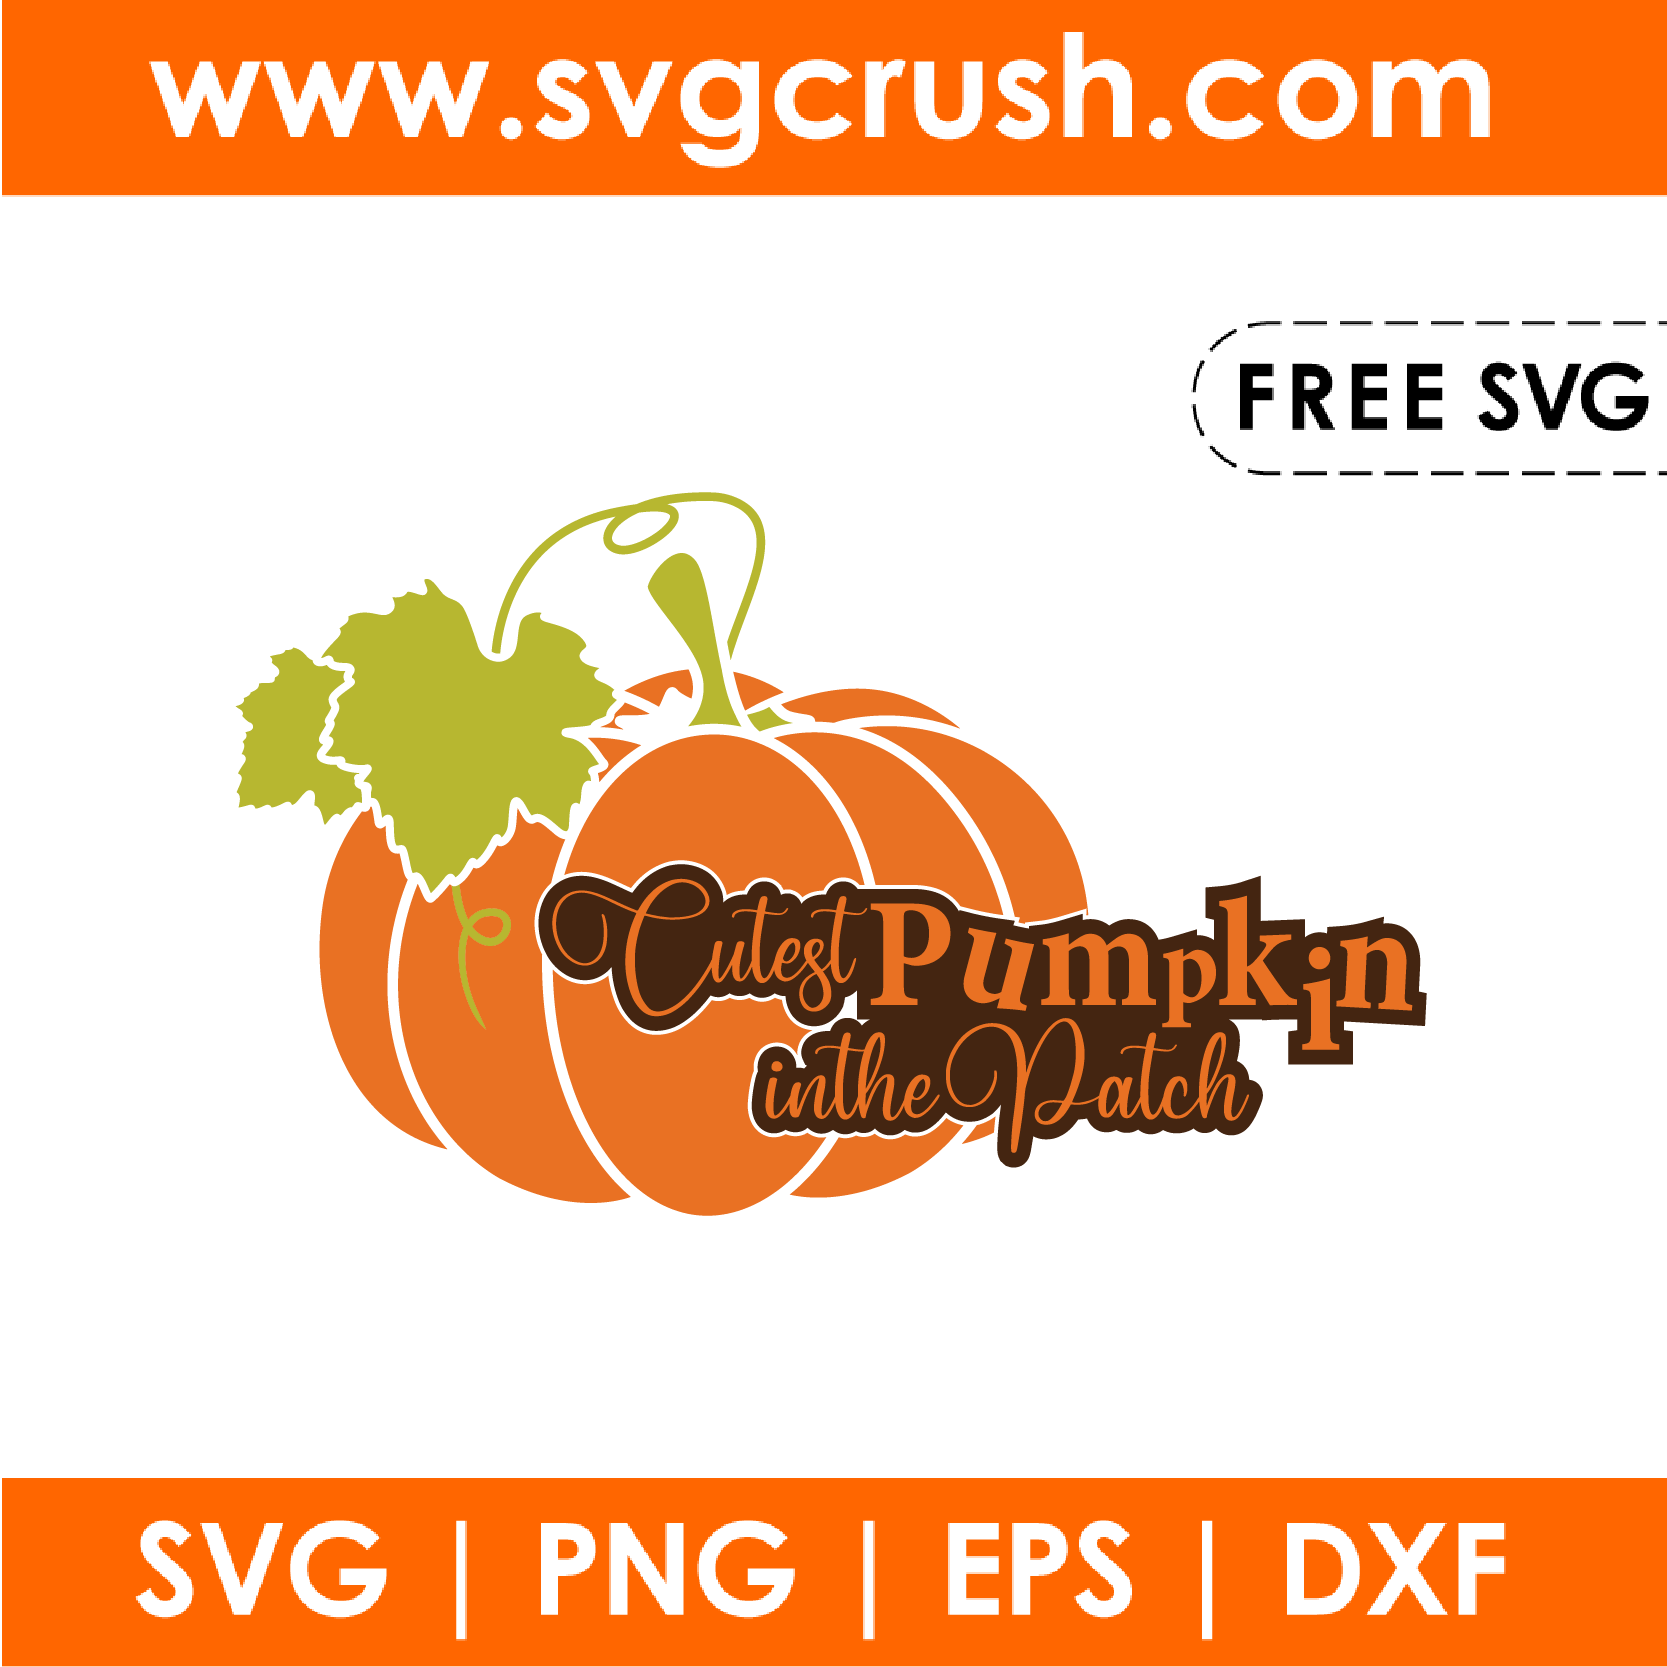 free cutest-pumpkin-in-the-patch-001 svg